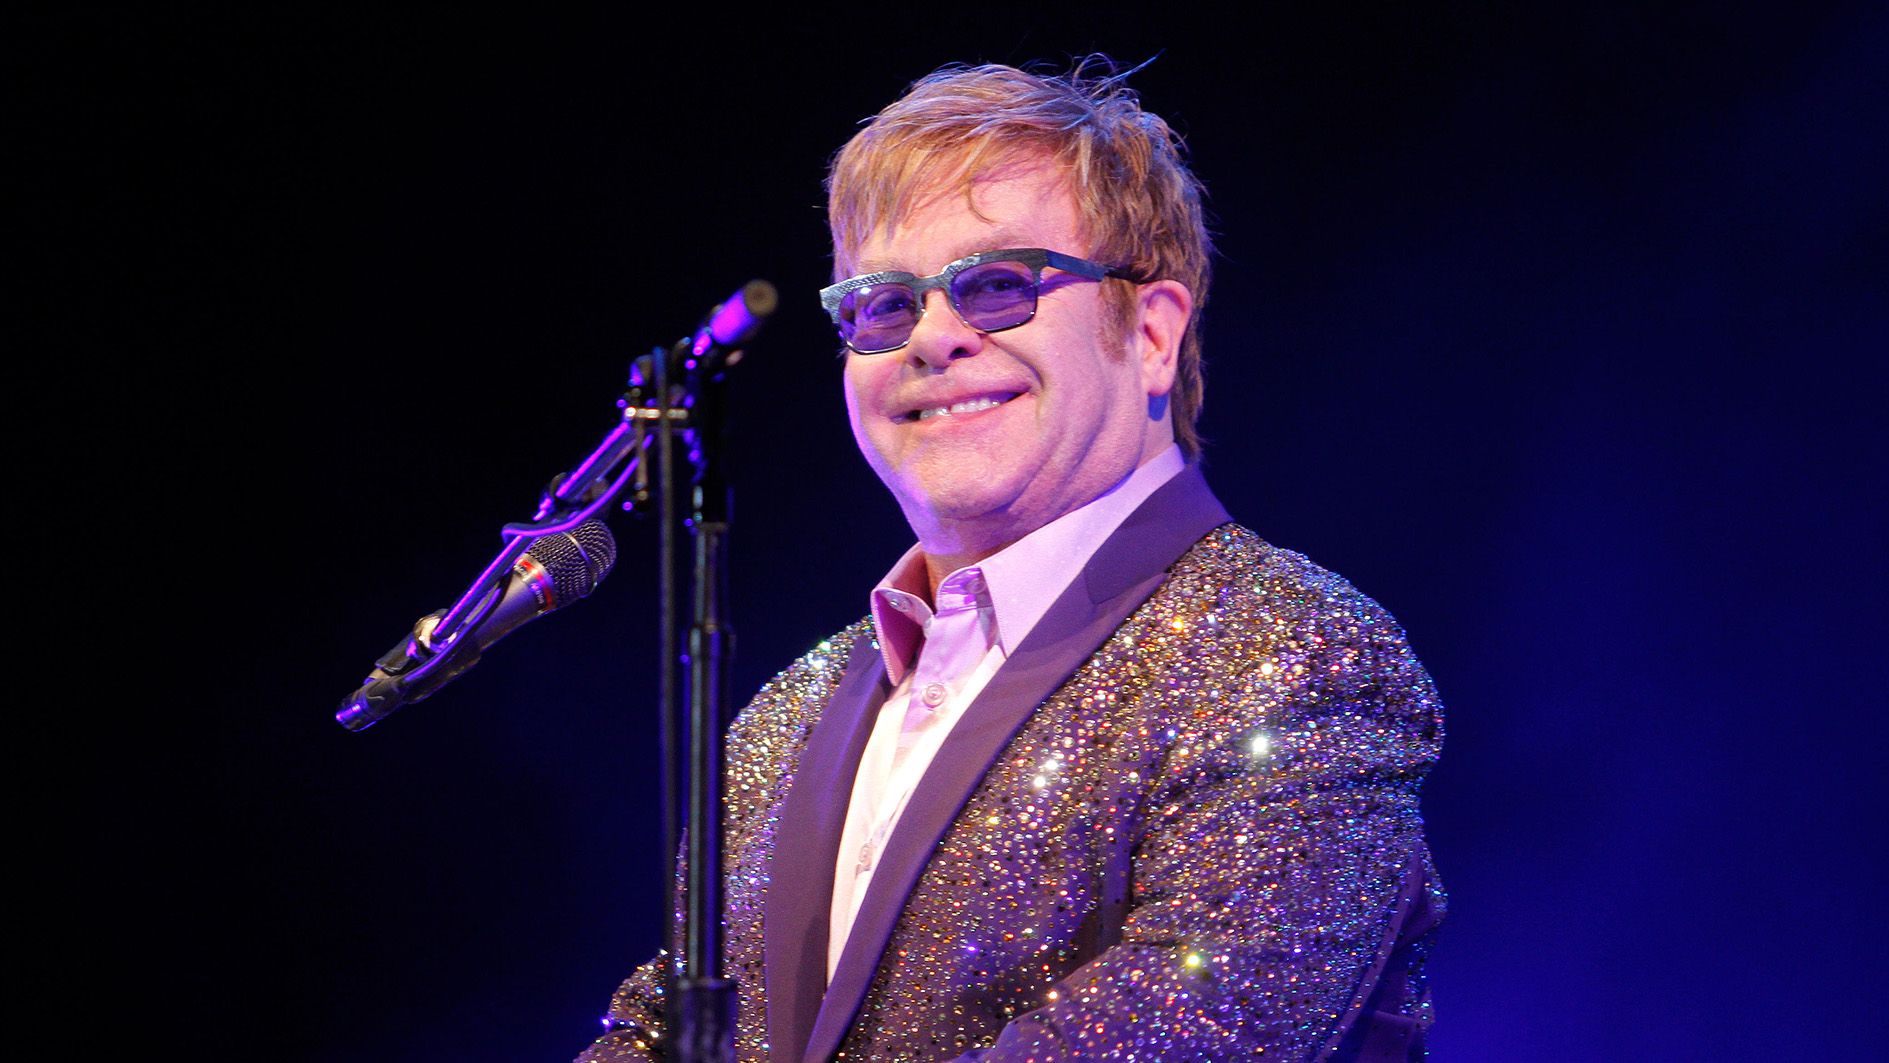 Elton John has resumed his 'Farewell Yellow Brick Road' tour